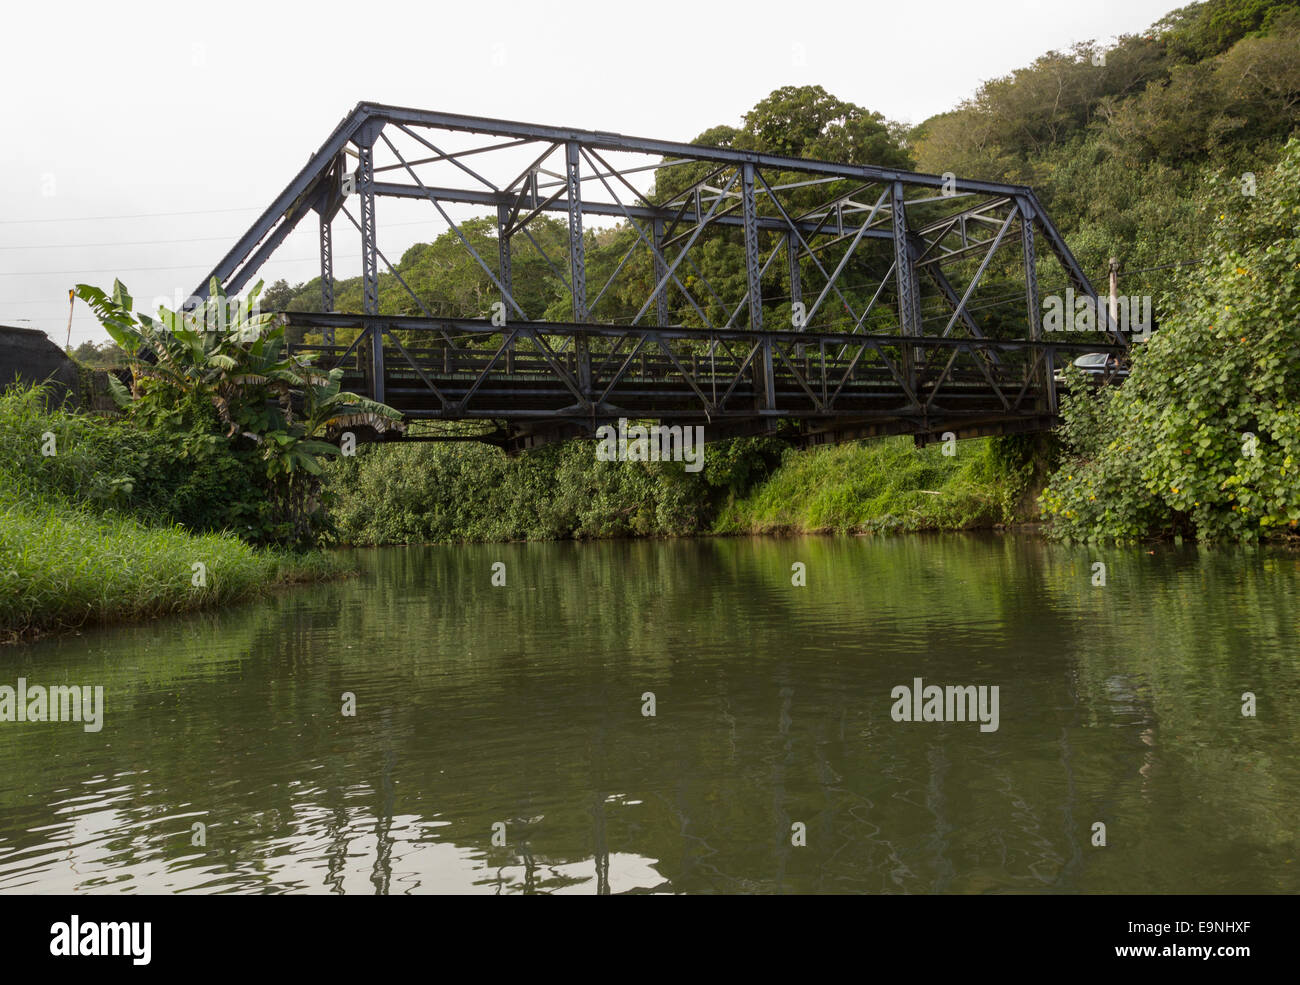 View of Hanelei bridge from the river Stock Photo